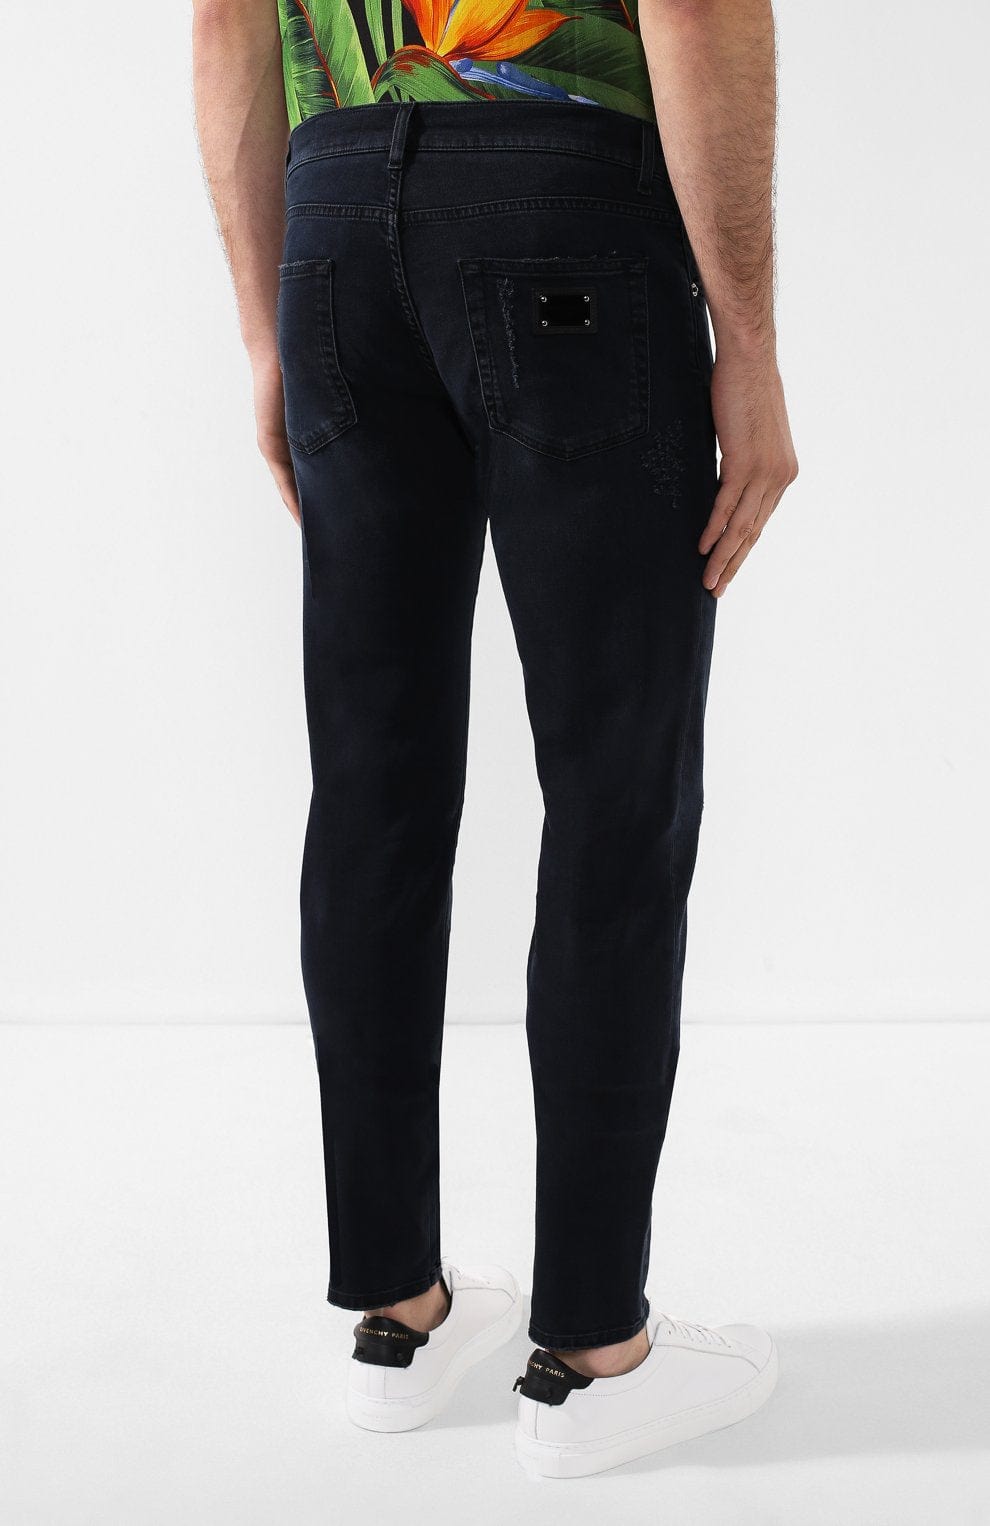 Dolce & Gabbana Skinny Stretch Cotton Jeans